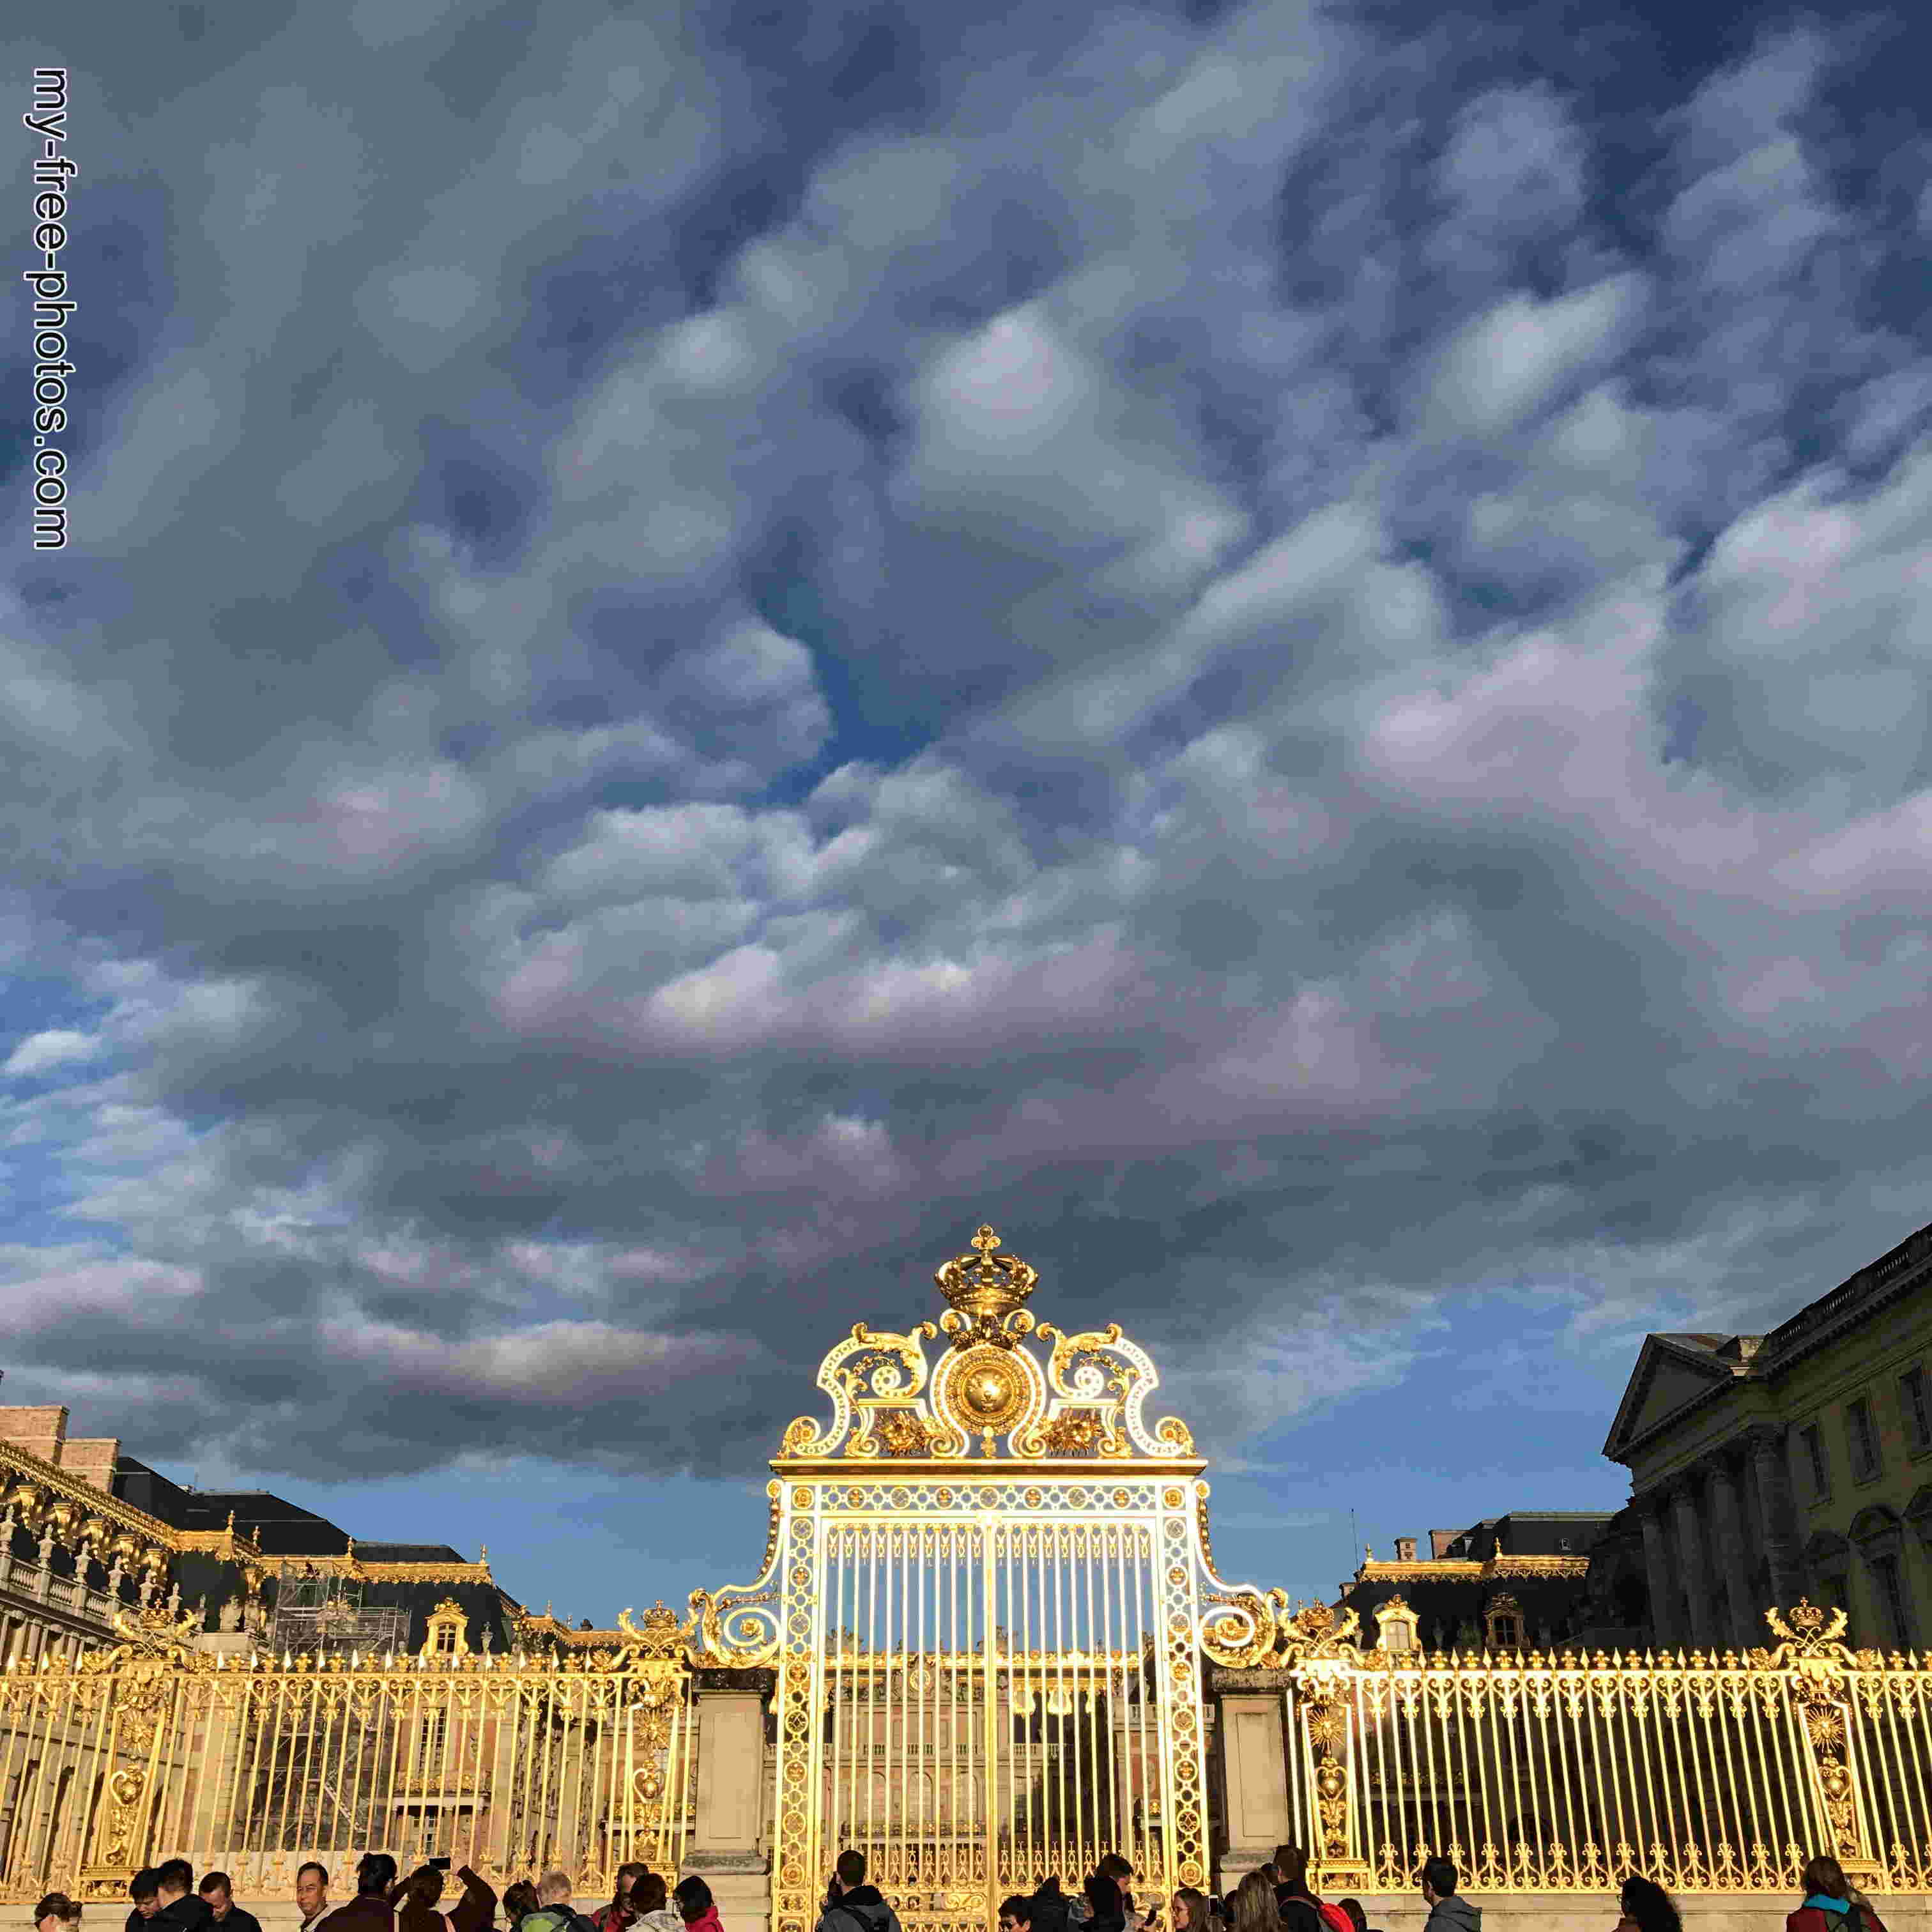 Versailles, France.